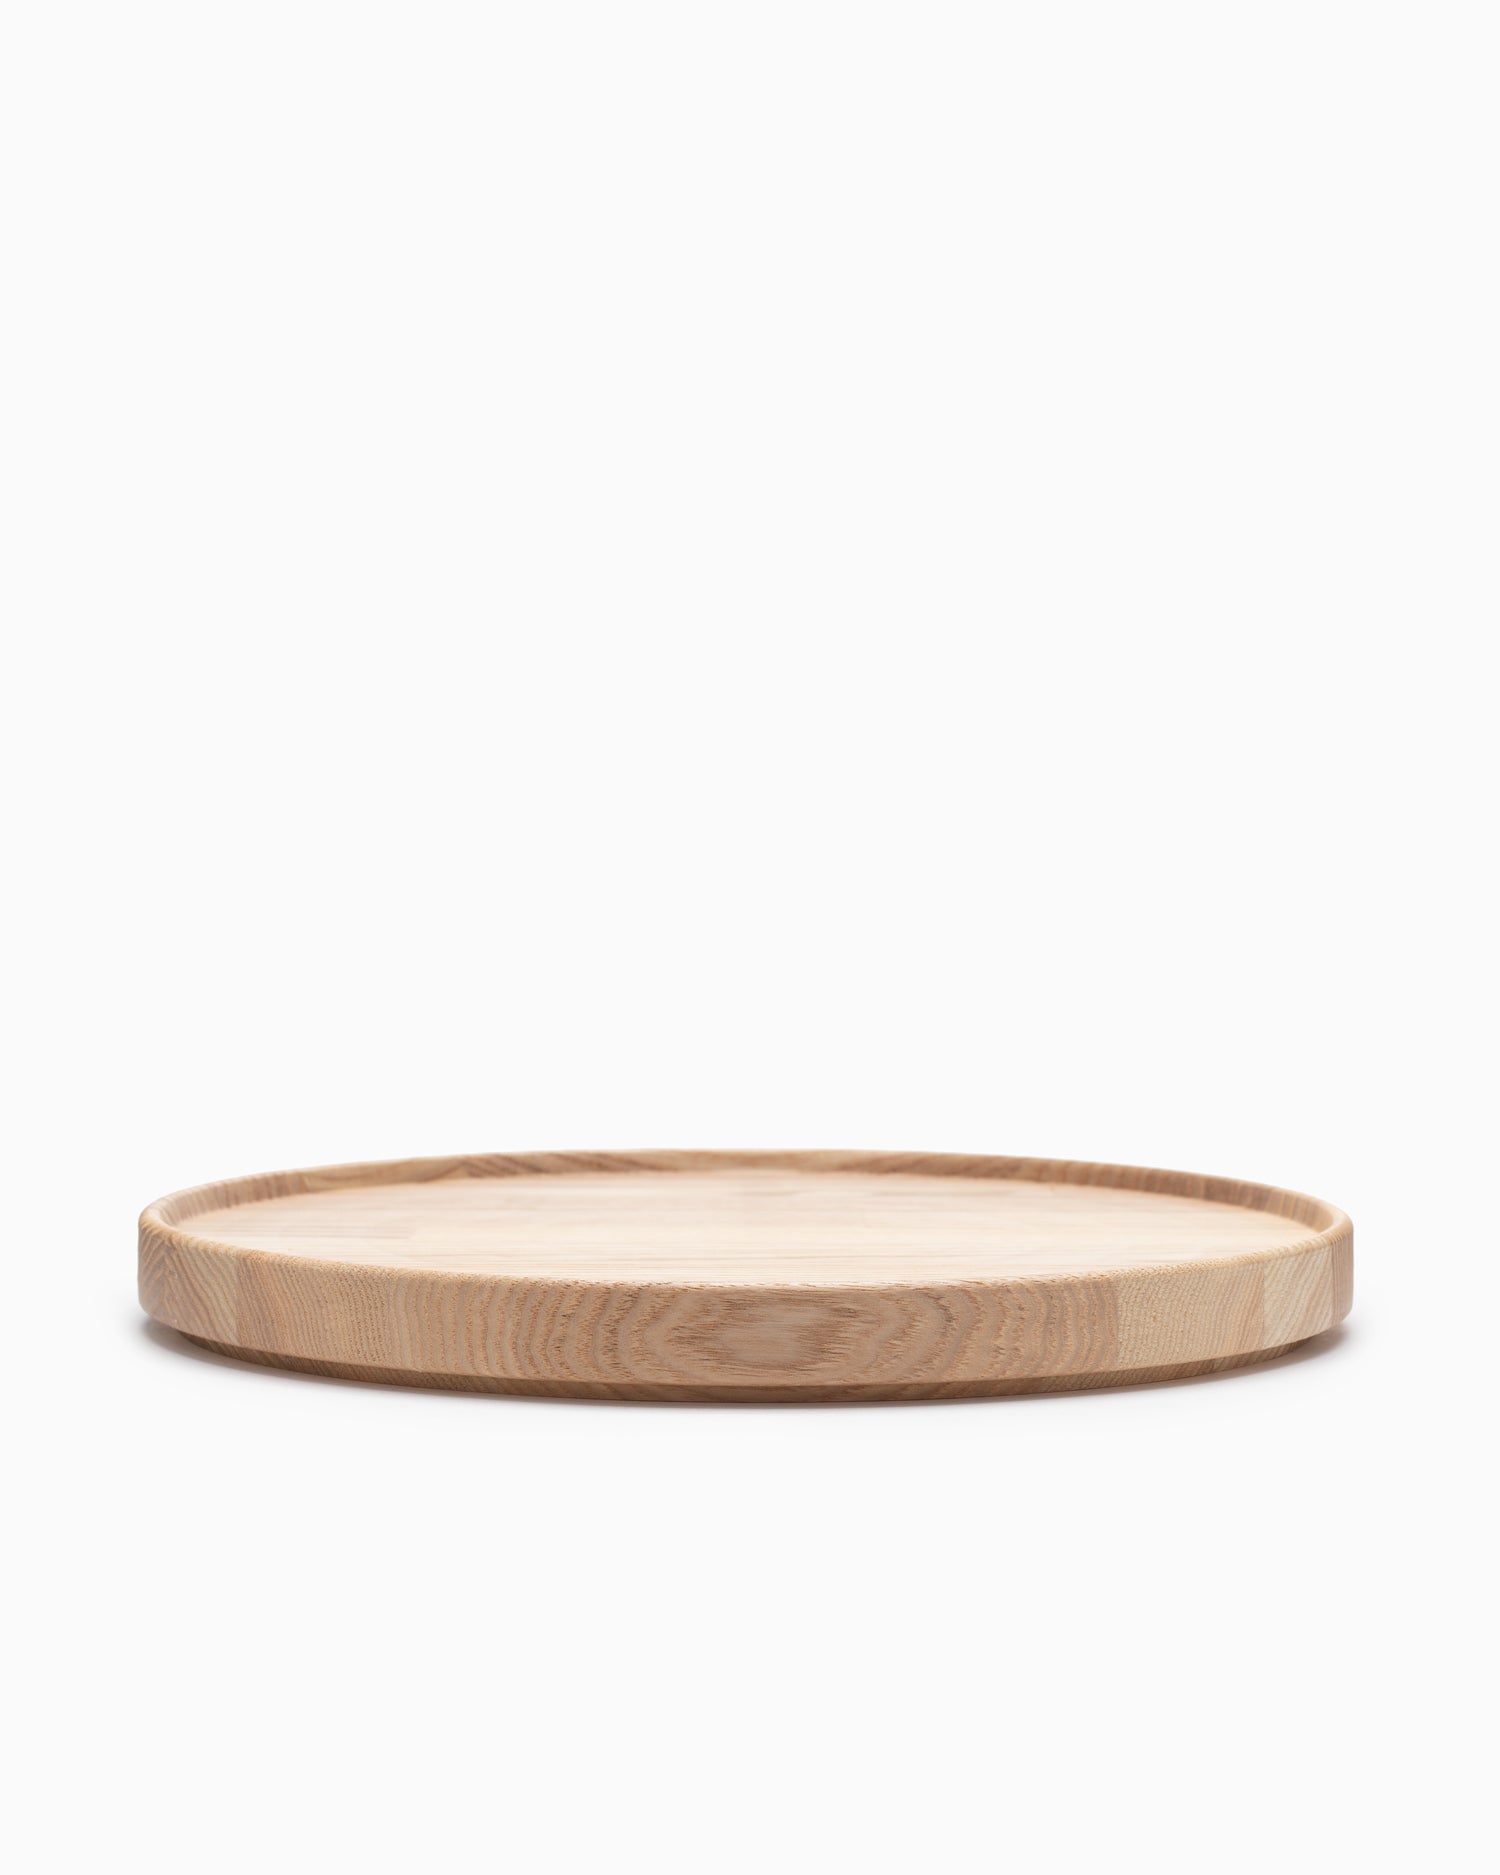 HP025 Ash Wooden Tray